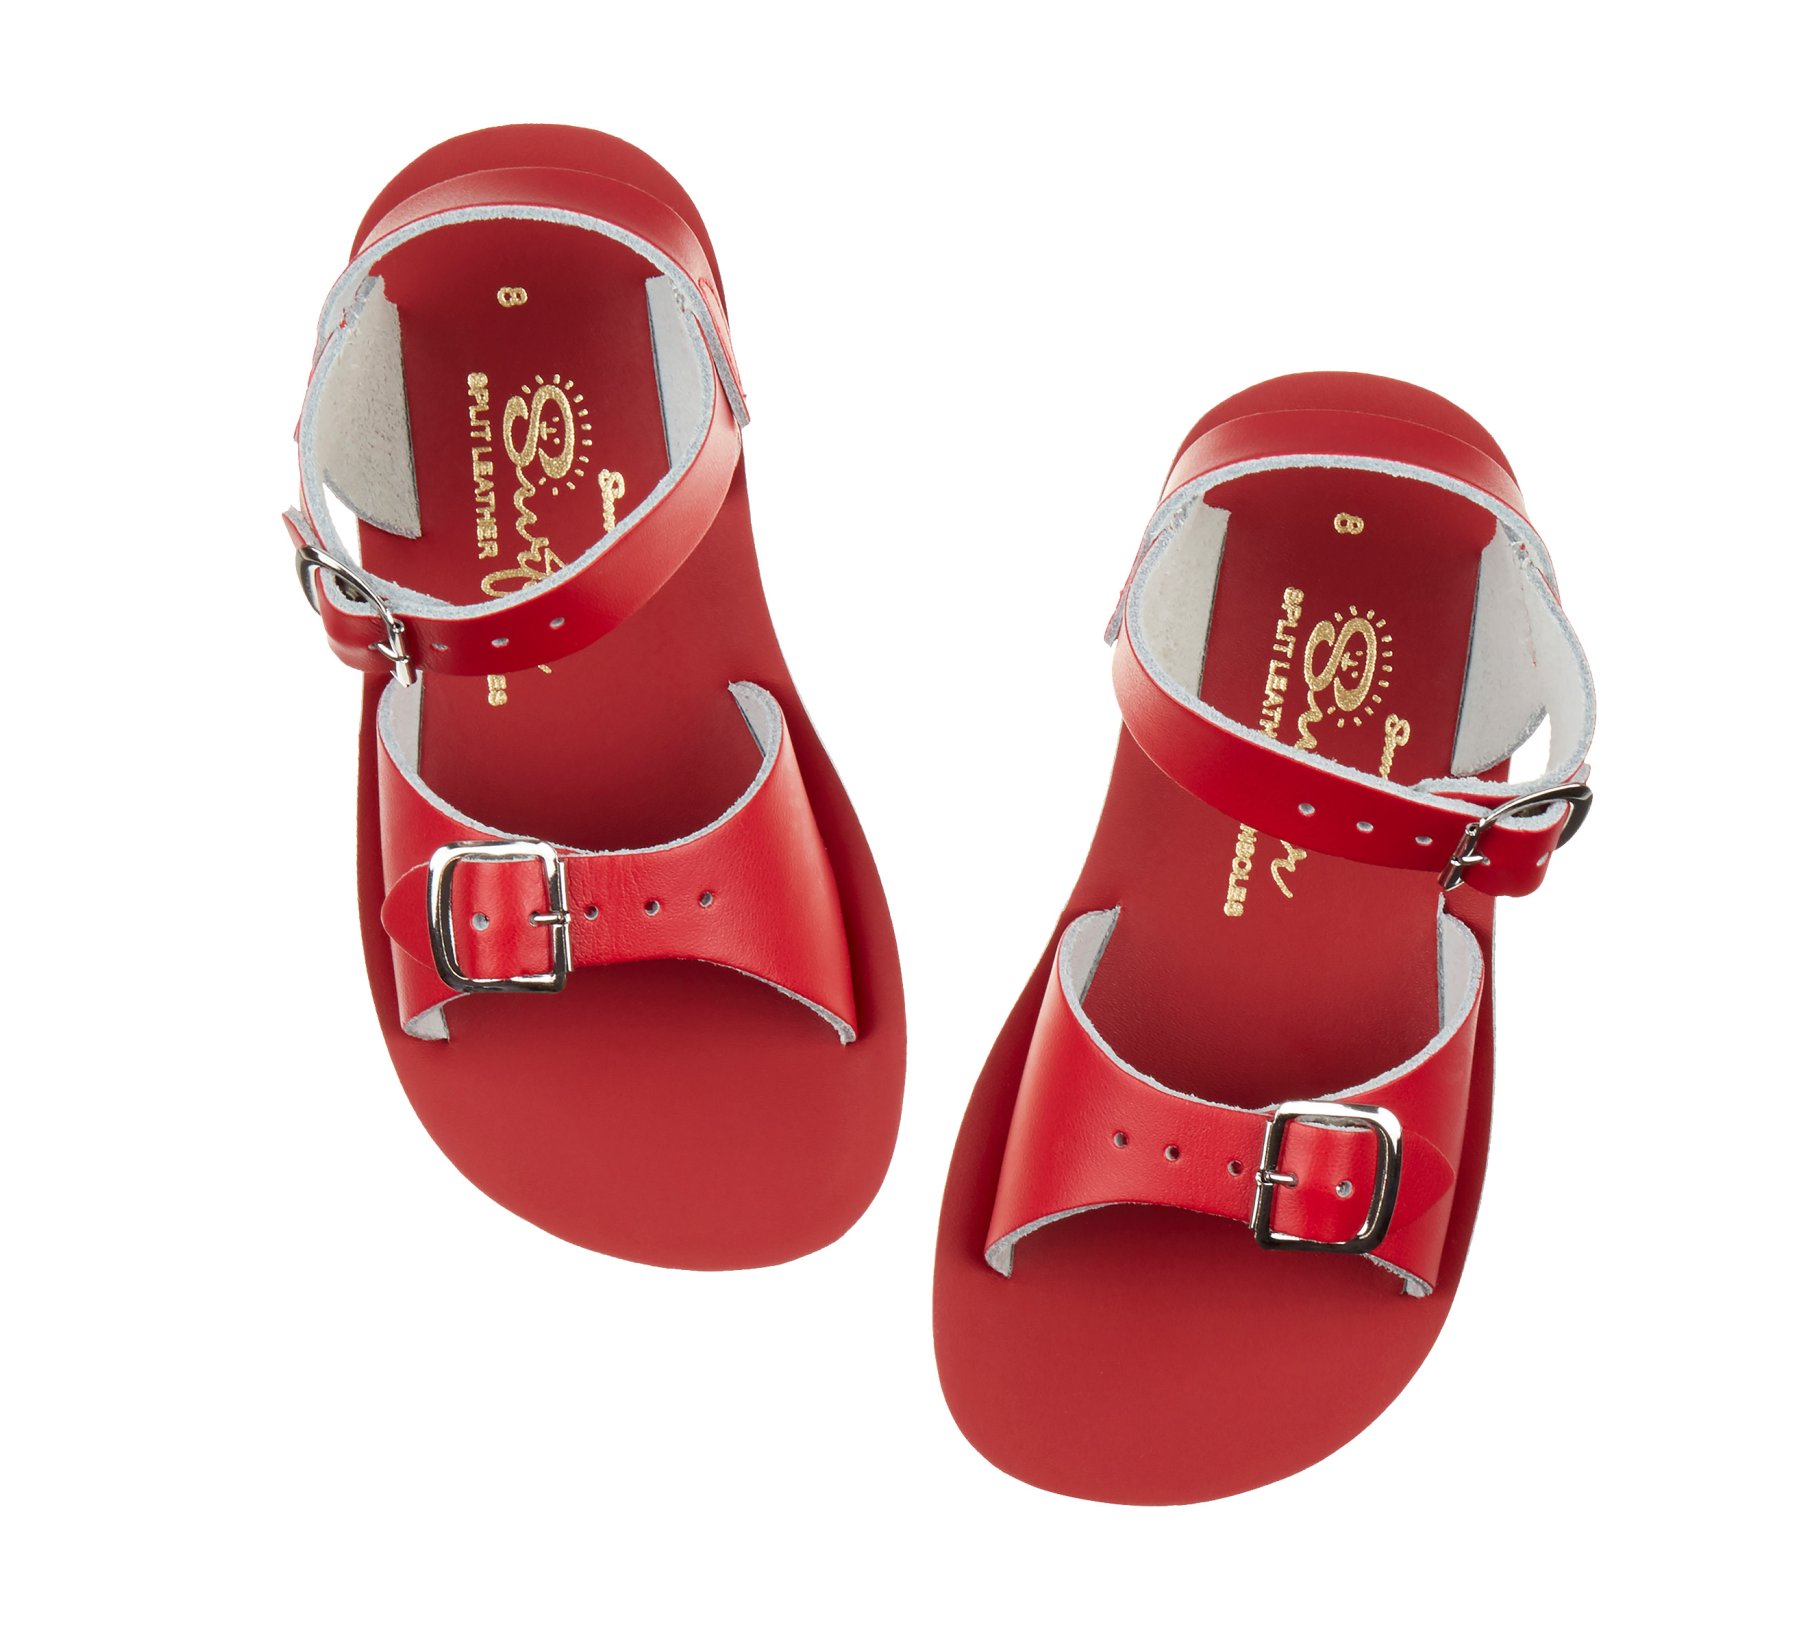 Surfer Red Kids Sandals - Salt Water Sandals